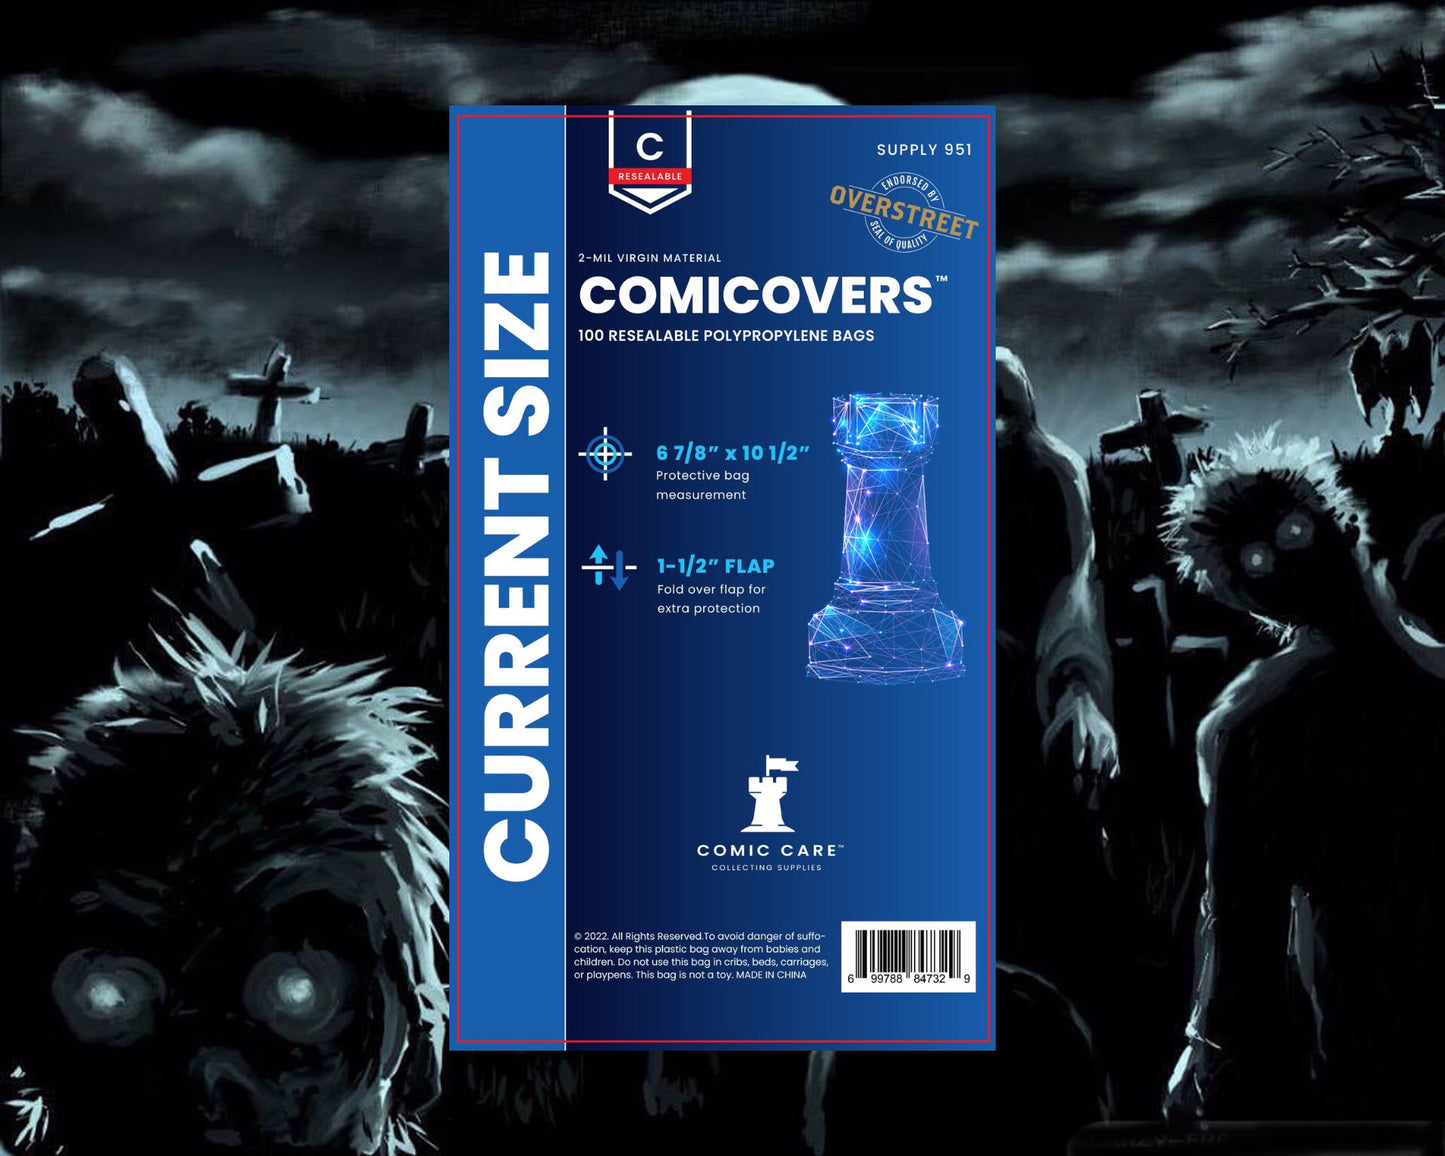 ComiCovers Current Polyethylene Comic Book Bags 6-7/8 x 10 1/2 Plus 1  1/2 Flap